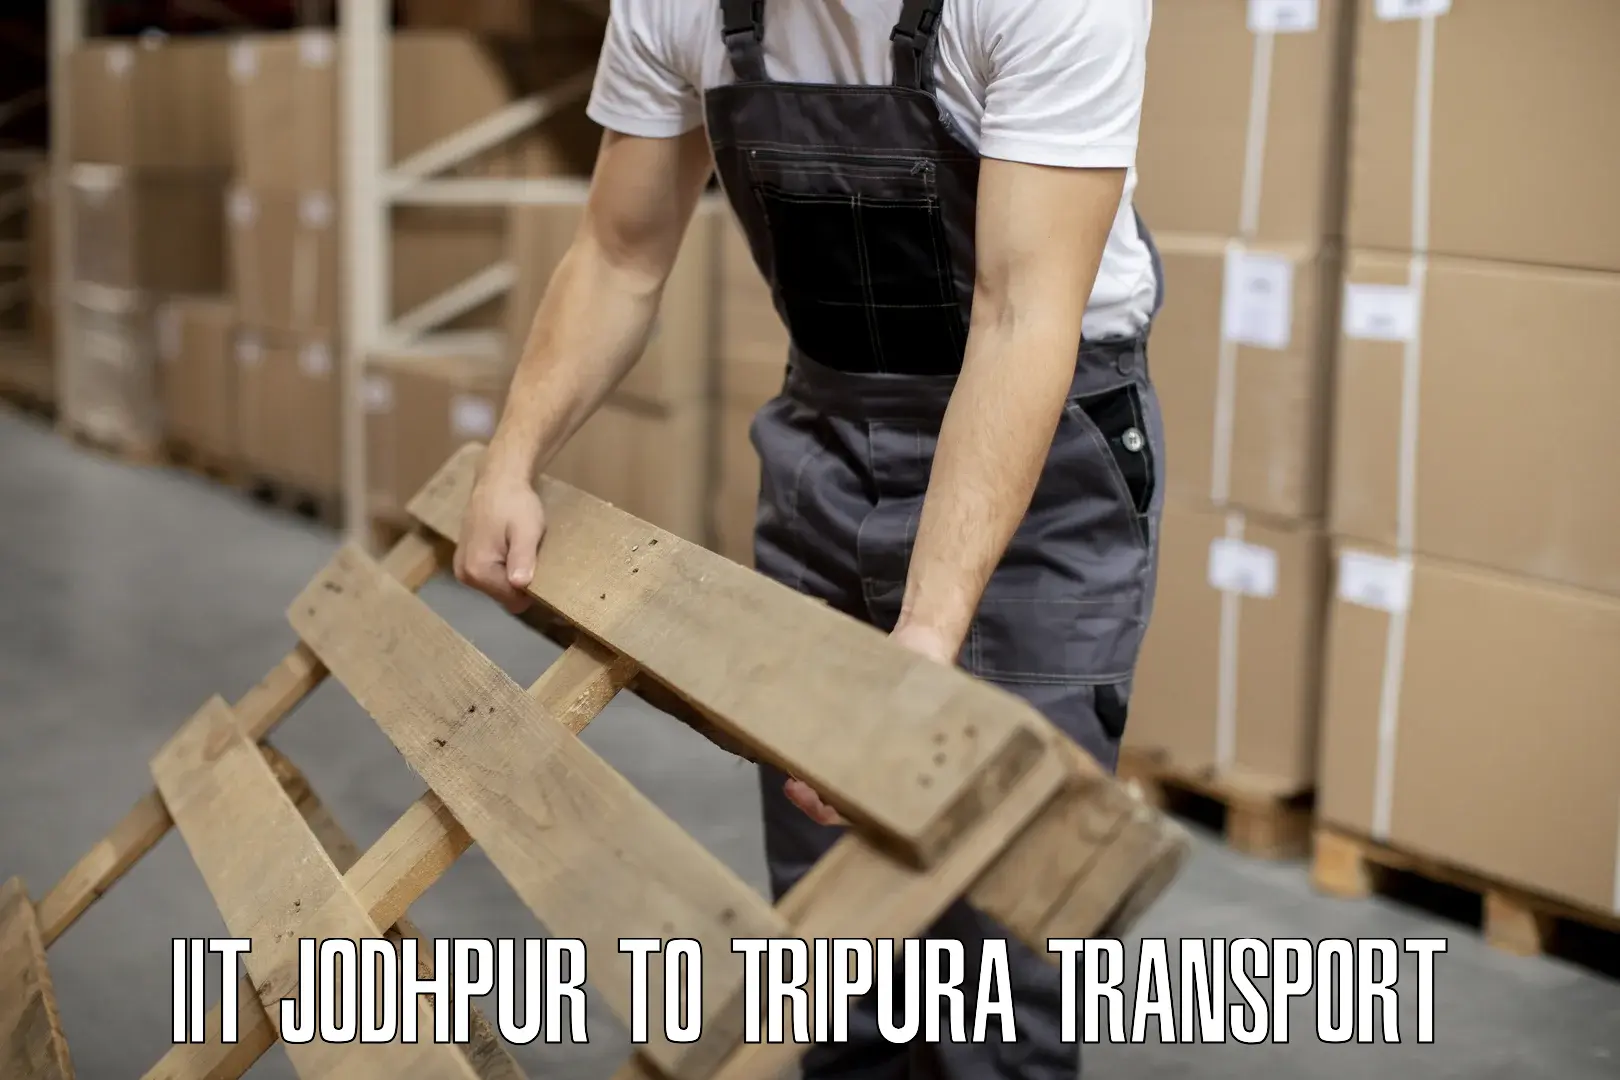 Daily transport service IIT Jodhpur to Tripura